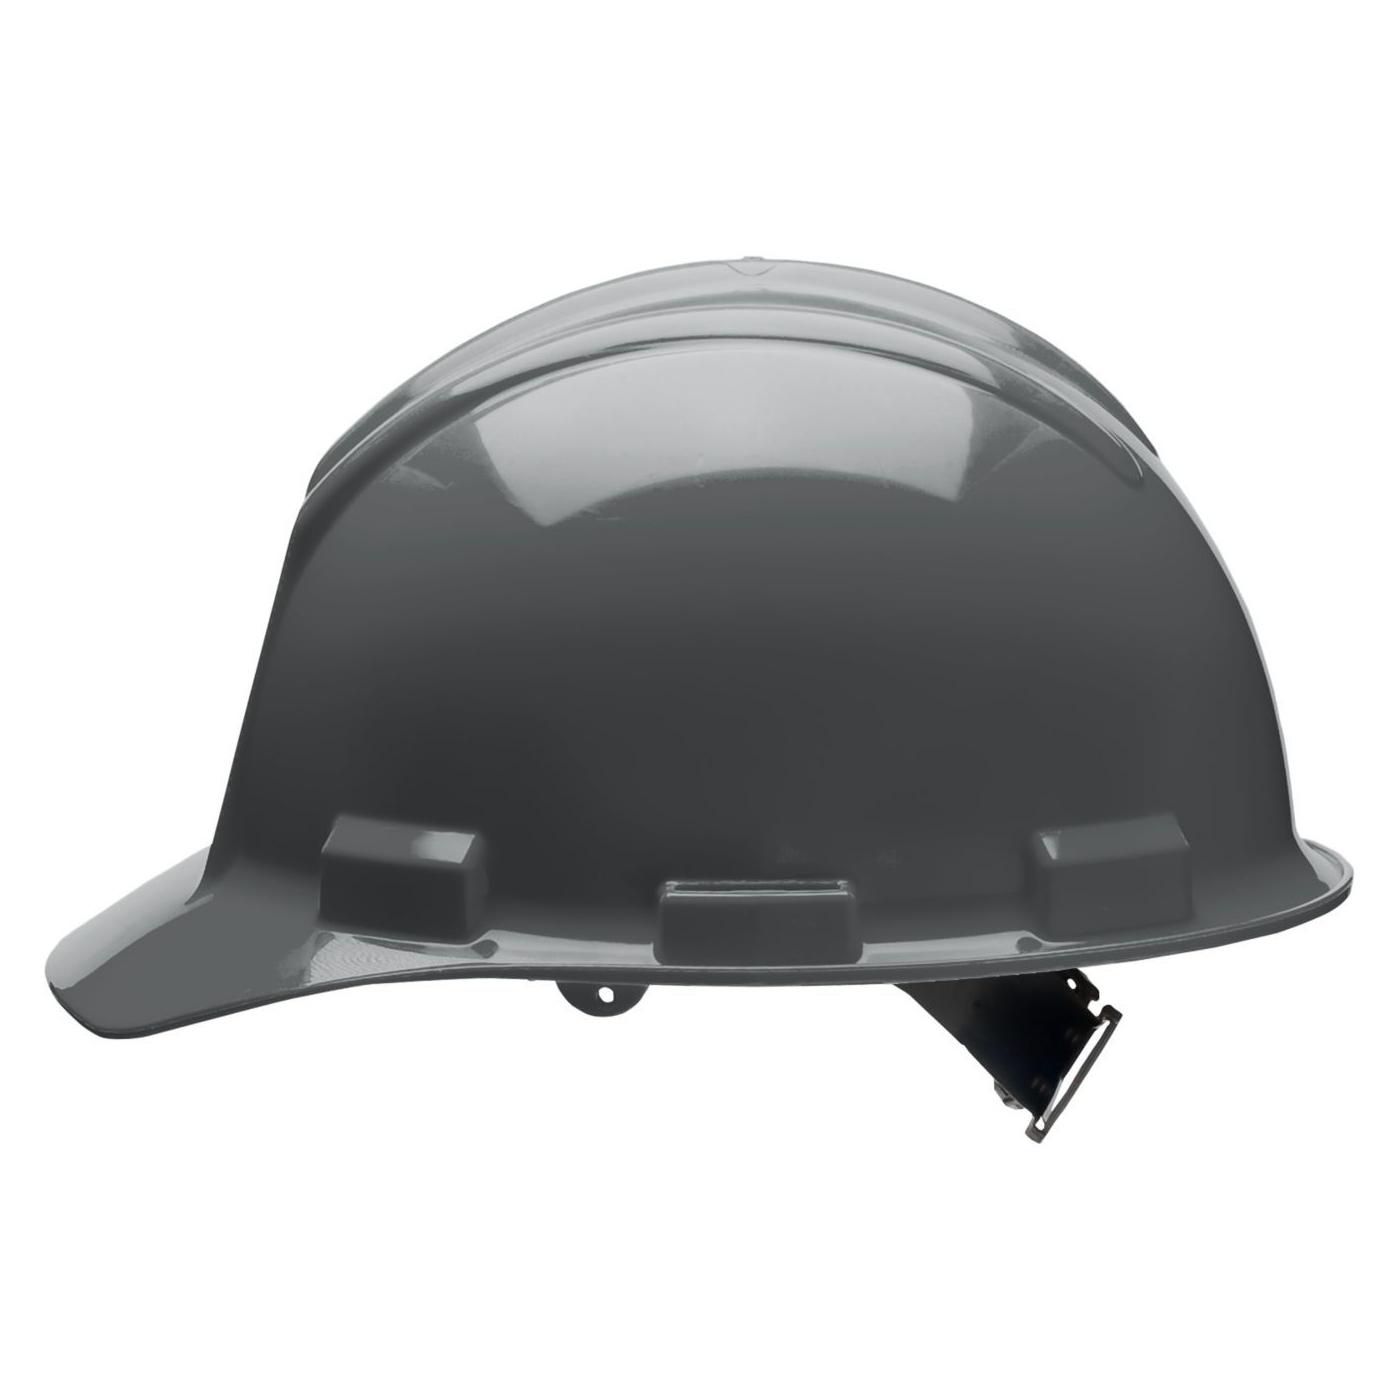 Bullard S51DGP Standard Hard Hat - Pinlock Suspension - Dove Grey